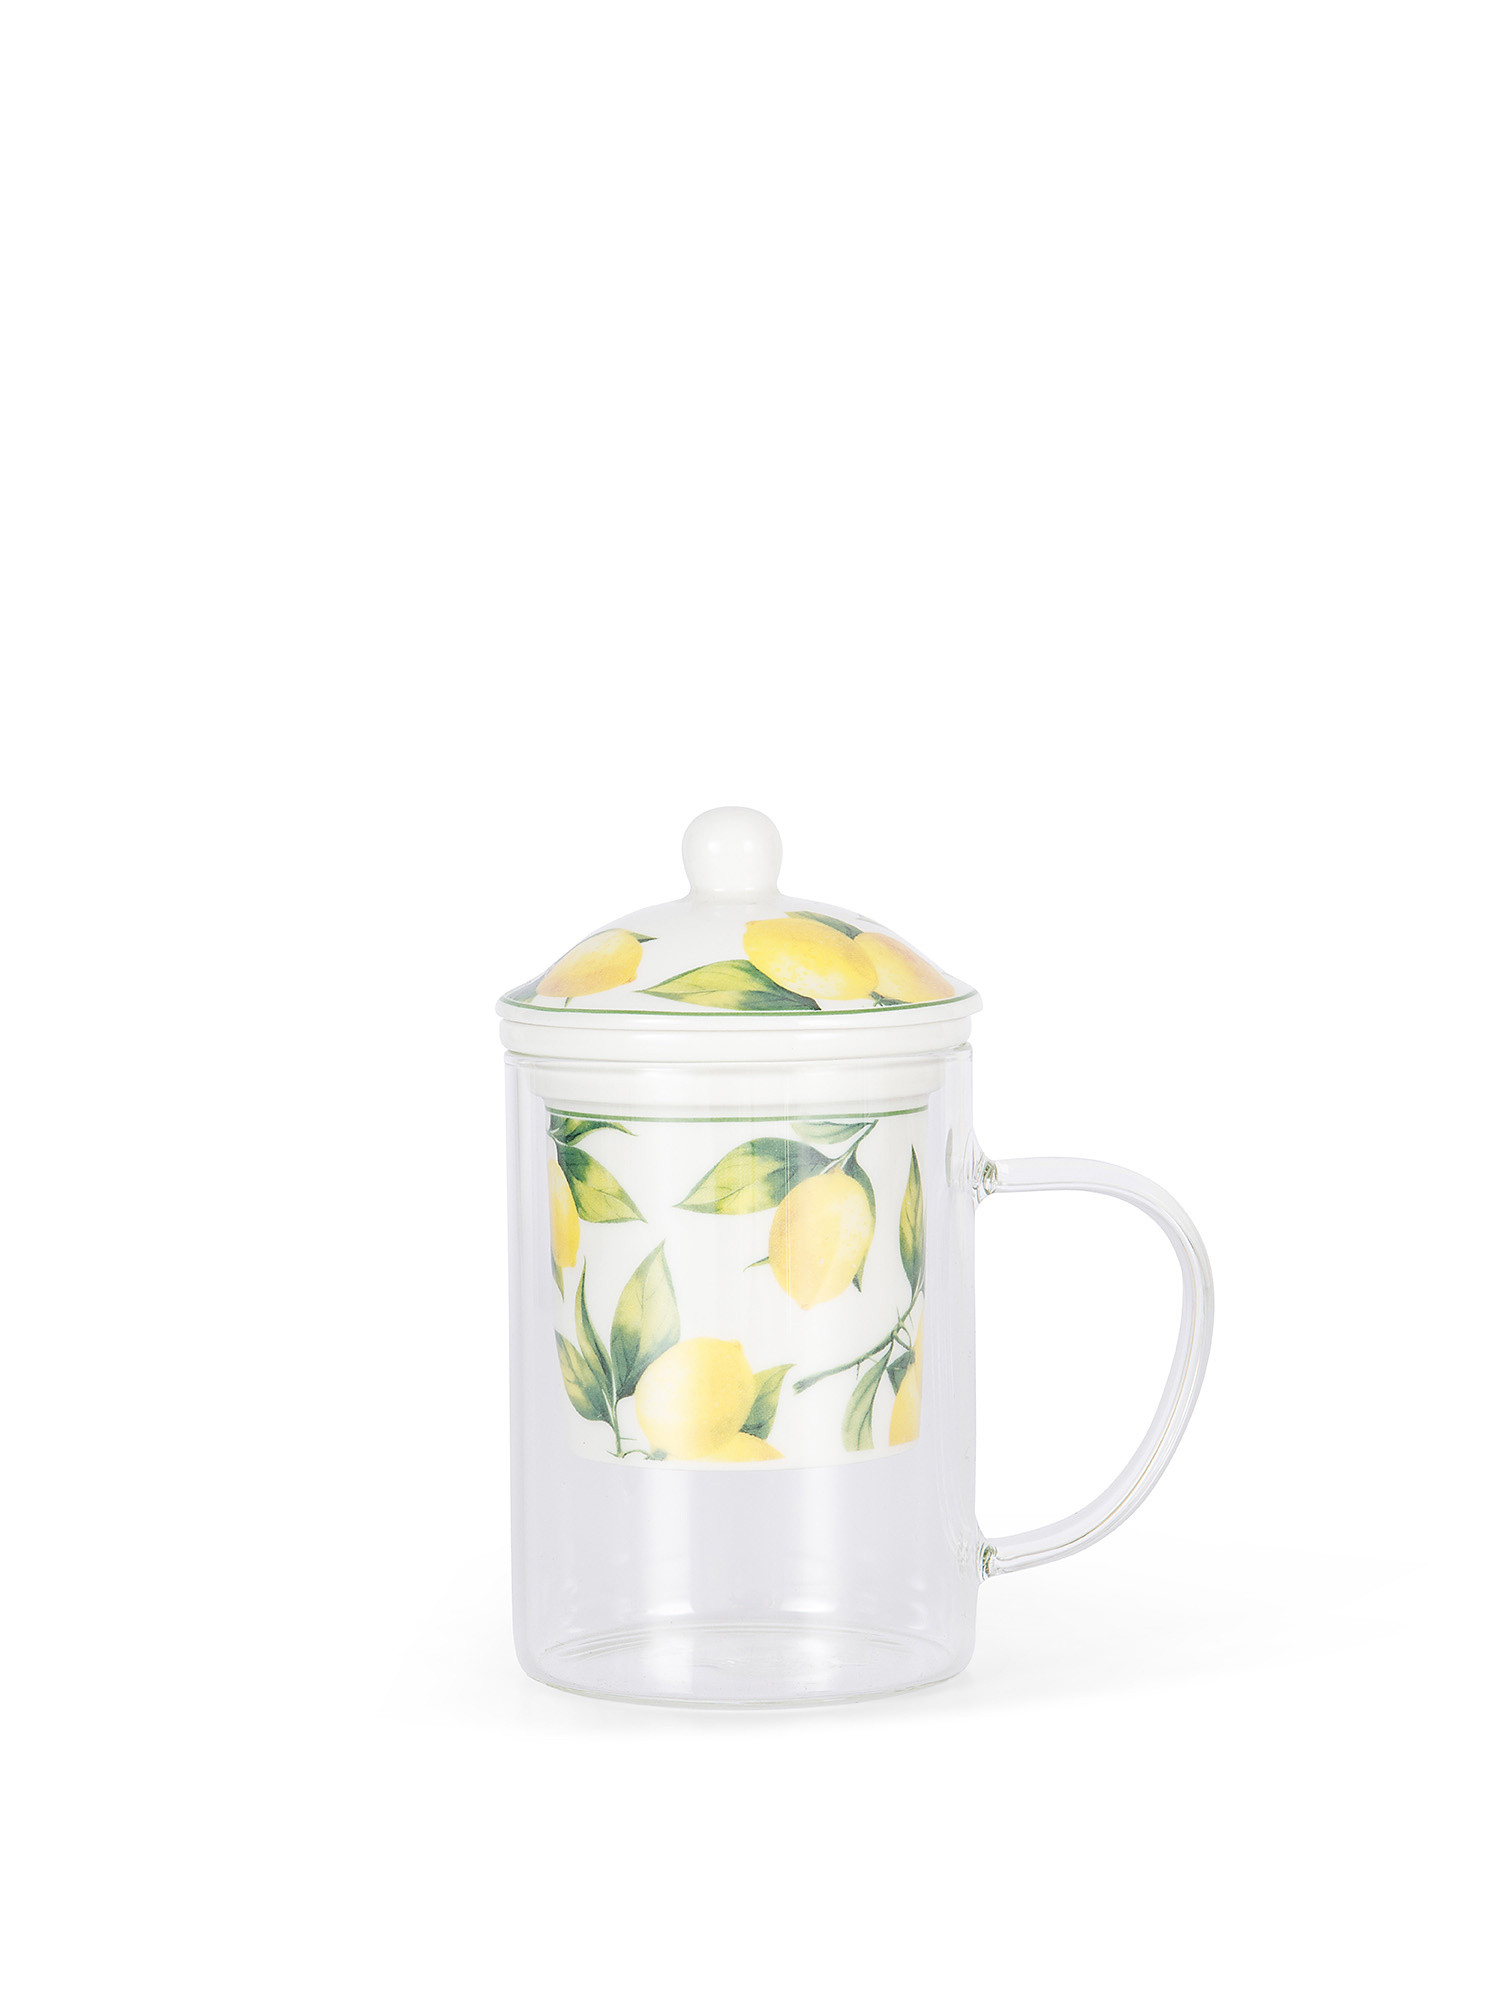 New bone china tea pot with lemons motif, White, large image number 0